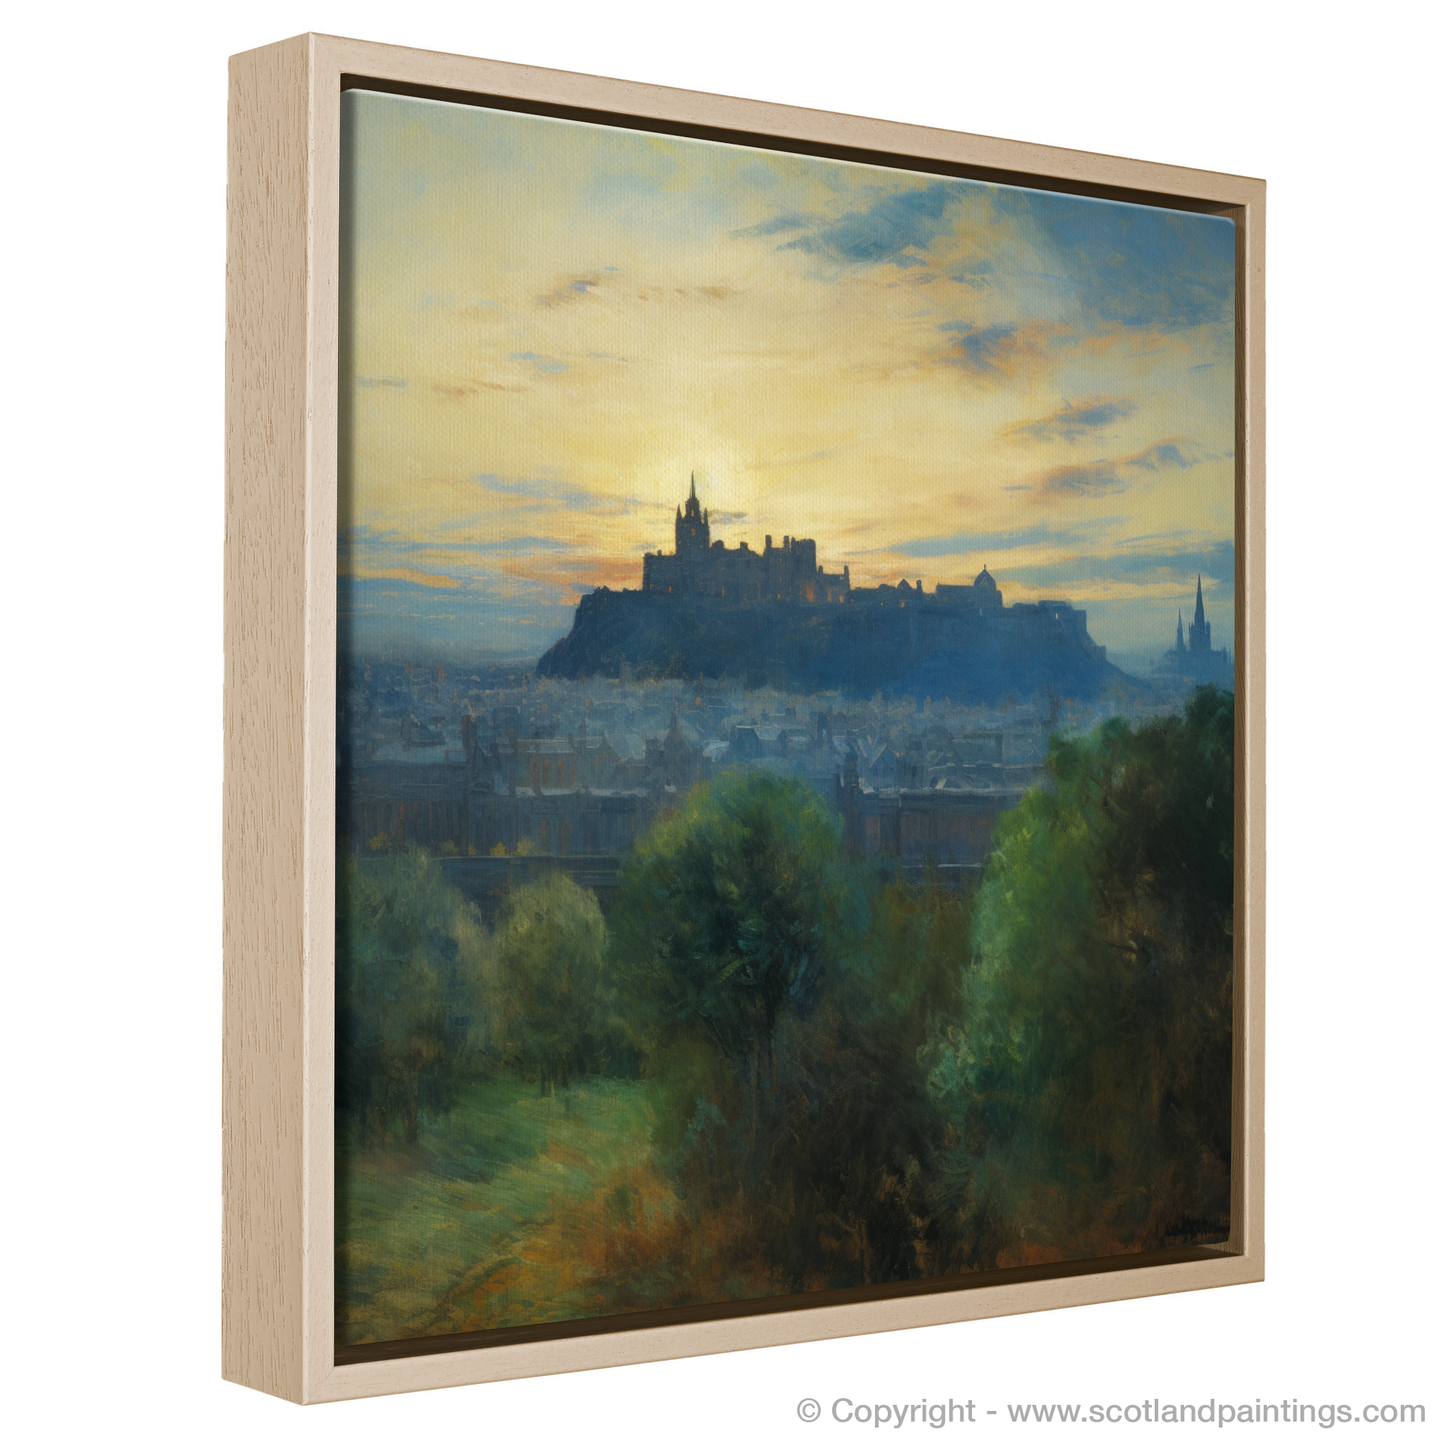 Edinburgh's Twilight Serenade: An Impressionist Tribute